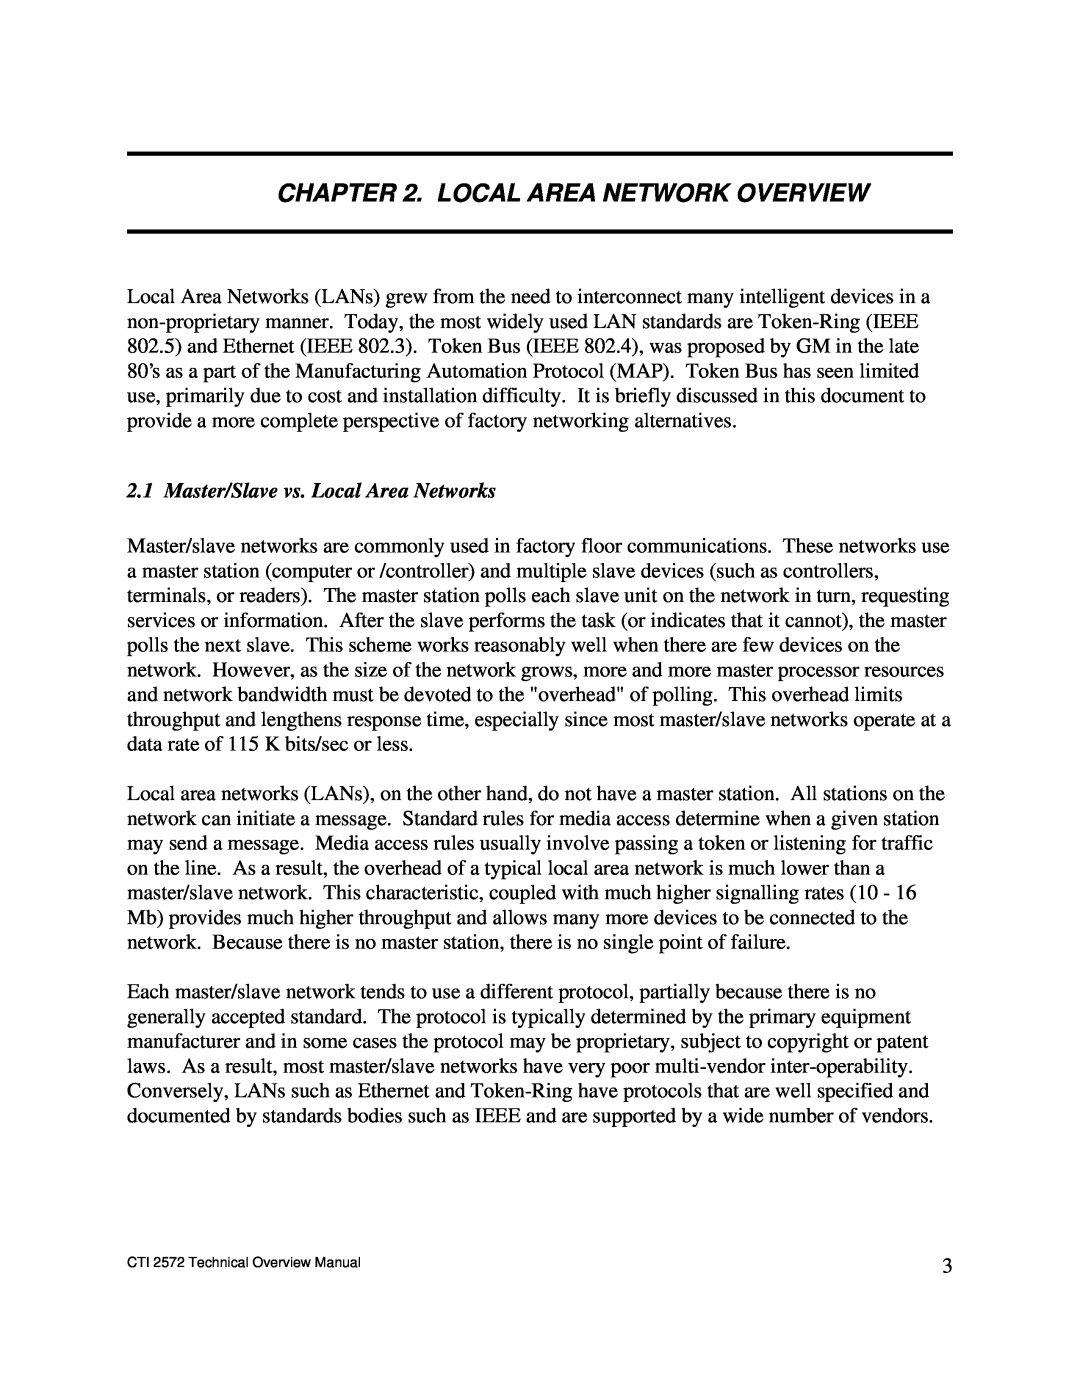 IBM CTI 2572 manual Local Area Network Overview, Master/Slave vs. Local Area Networks 